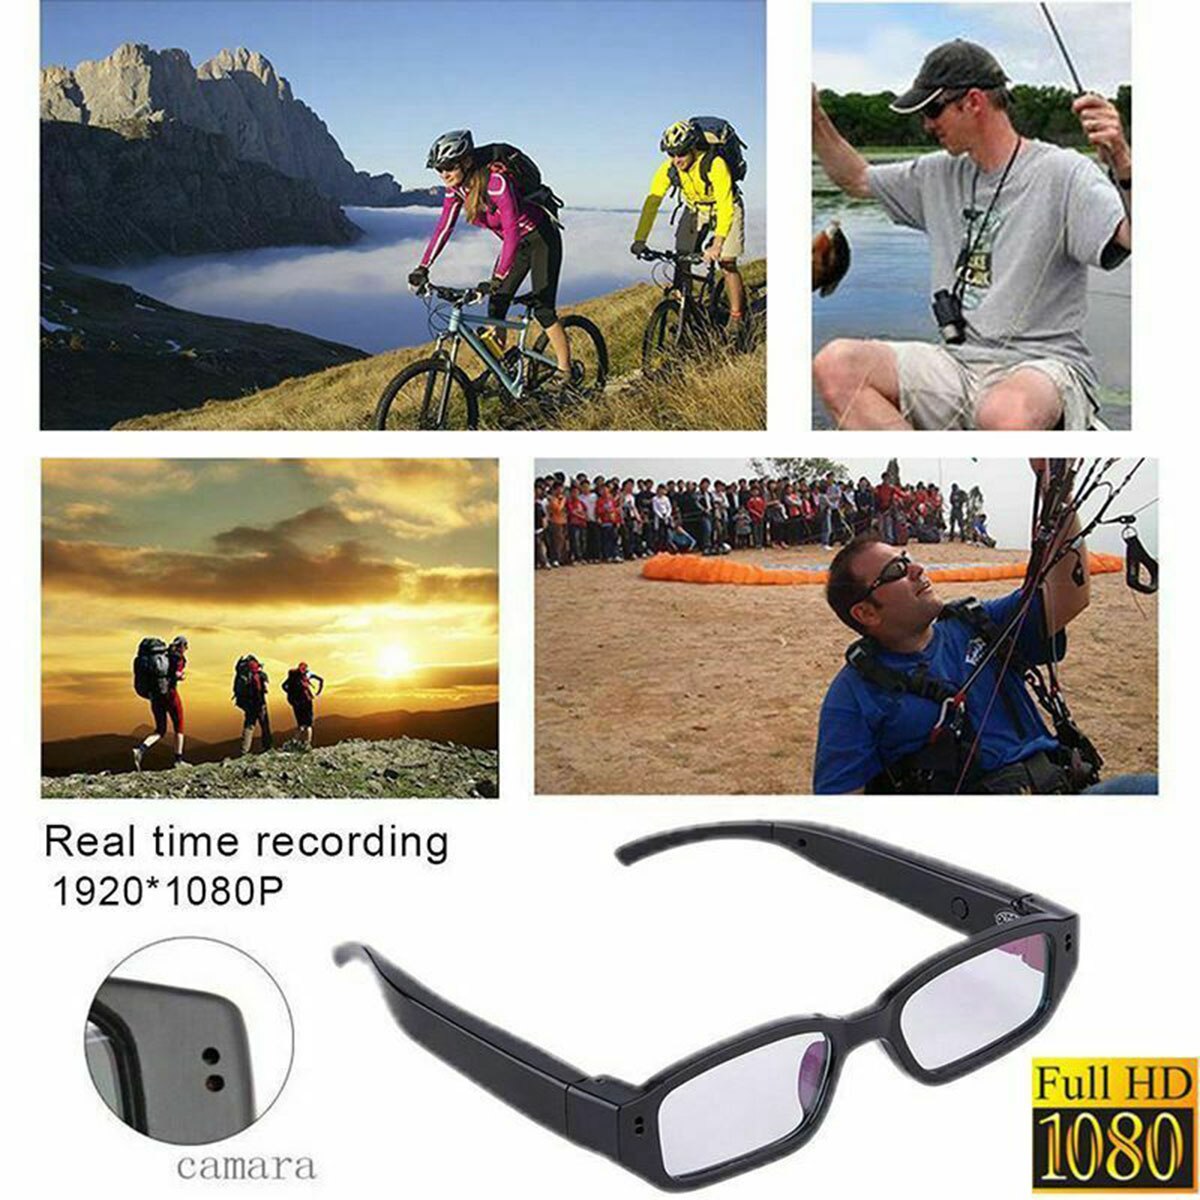 1080P HD Mini Camera Glasses Eyeglass DVR Video Recorder NVR Records for field training climbers travelers